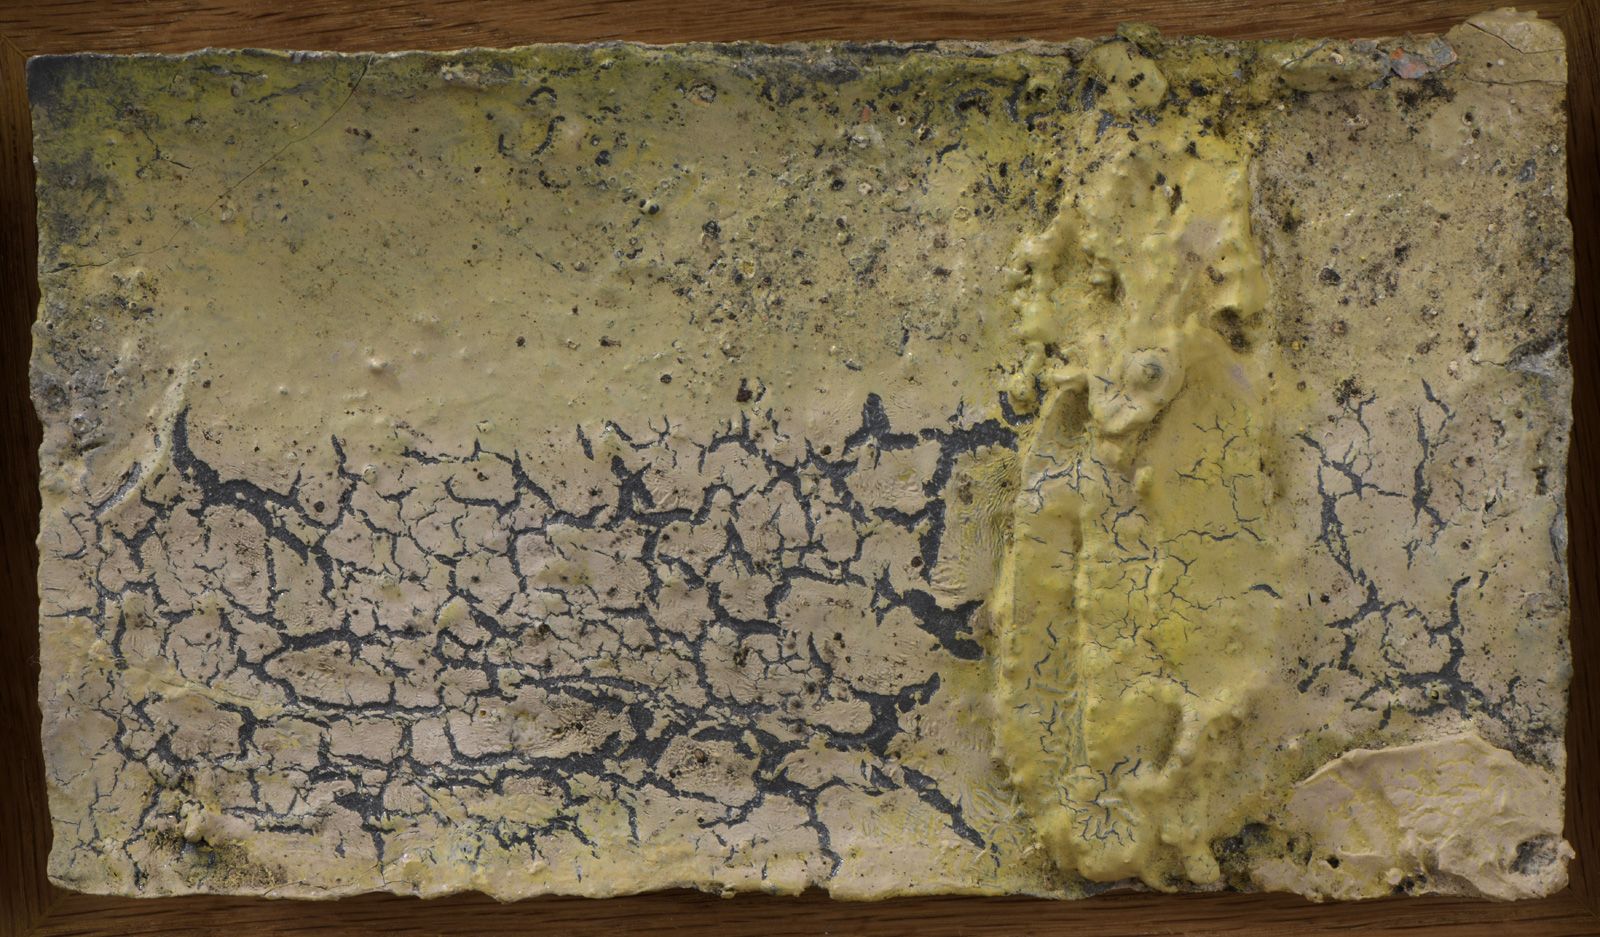 Null 皮埃尔-塔尔-库特(1905-1985)

无题，1981年

纸上油彩贴在面板上。

10x18厘米

该作品在艺术家档案中的编号为xd-1981-&hellip;